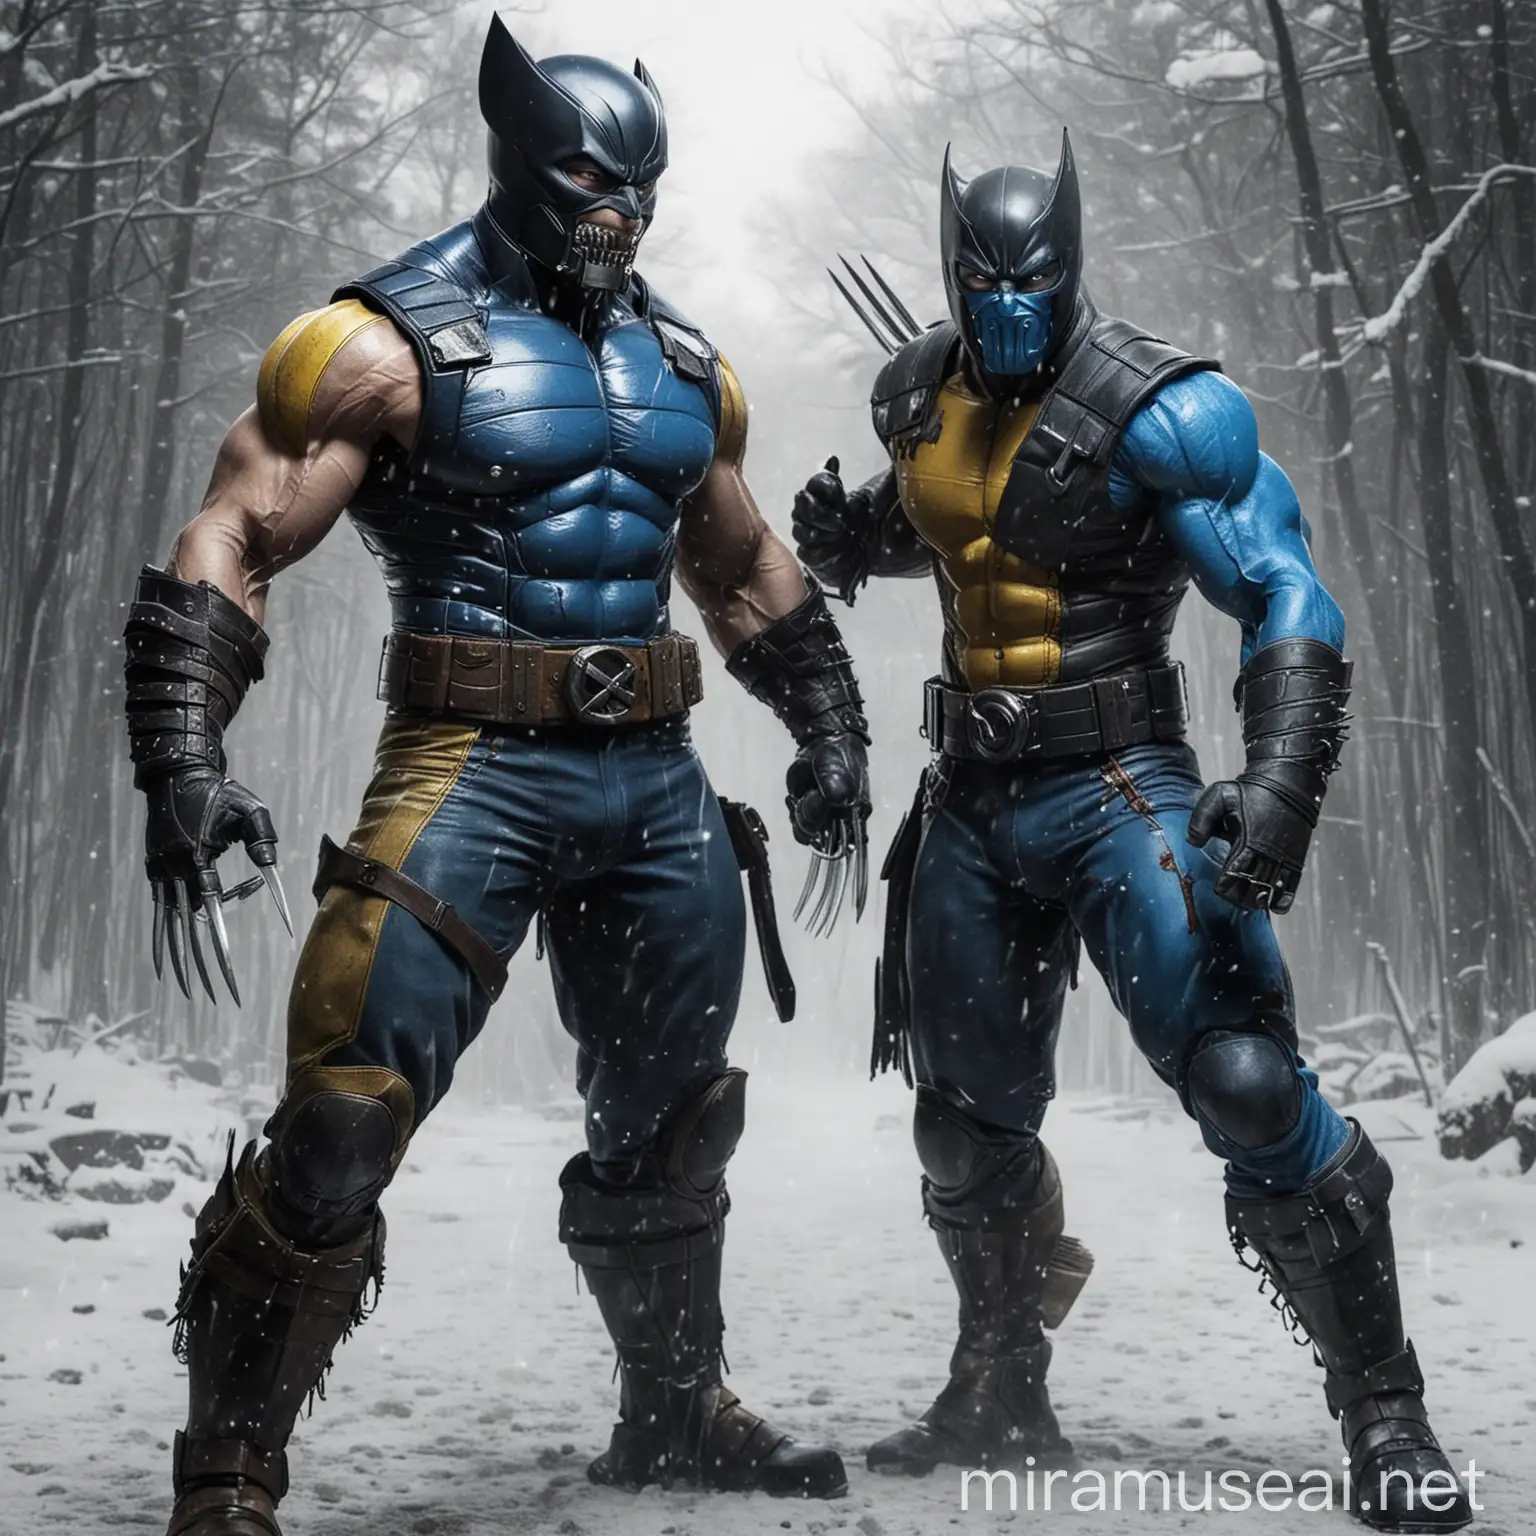 Hybrid Warrior Fusion of Wolverine and Sub Zero